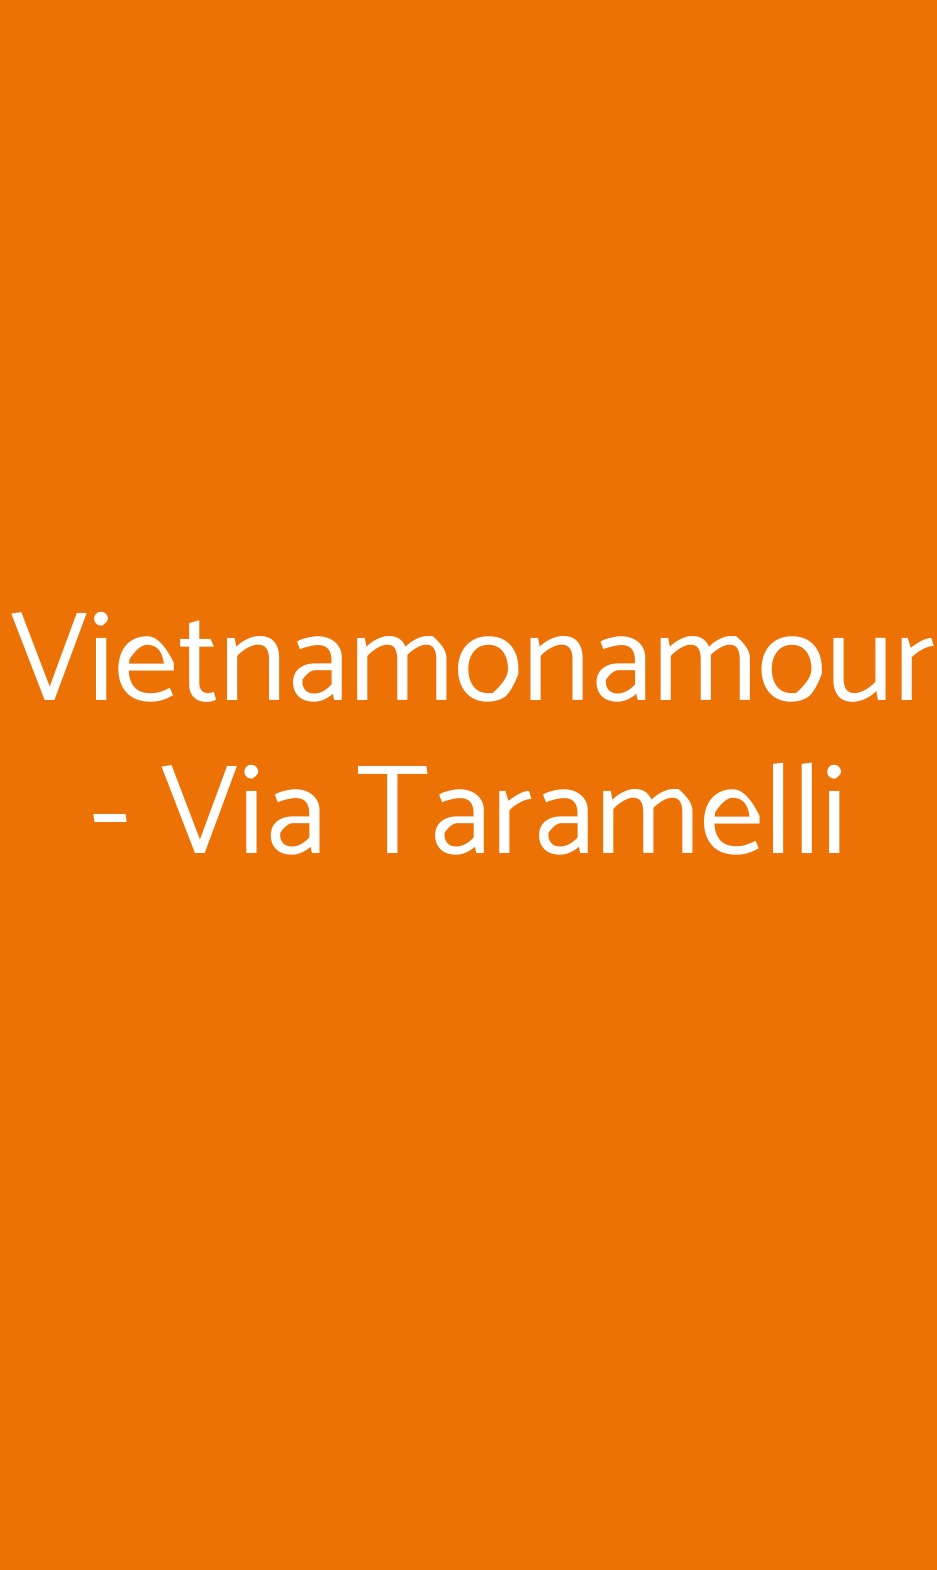 Vietnamonamour - Via Taramelli Milano menù 1 pagina